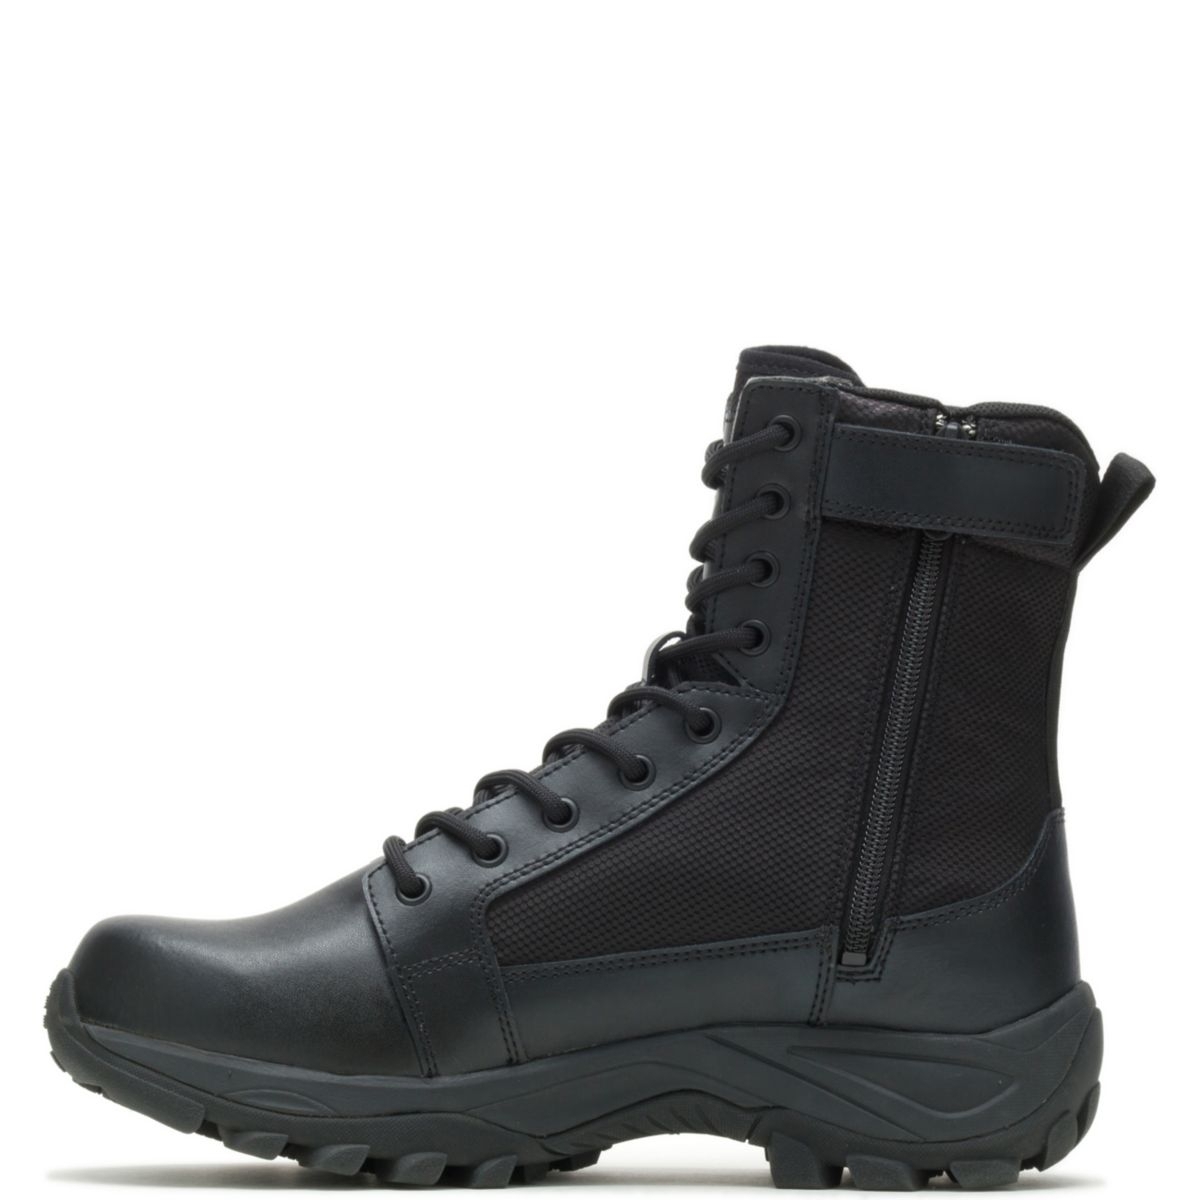 Bates Men's Fuse 8-inch Side Zip Waterproof Boot Black - E06508 BLACK - BLACK, 8